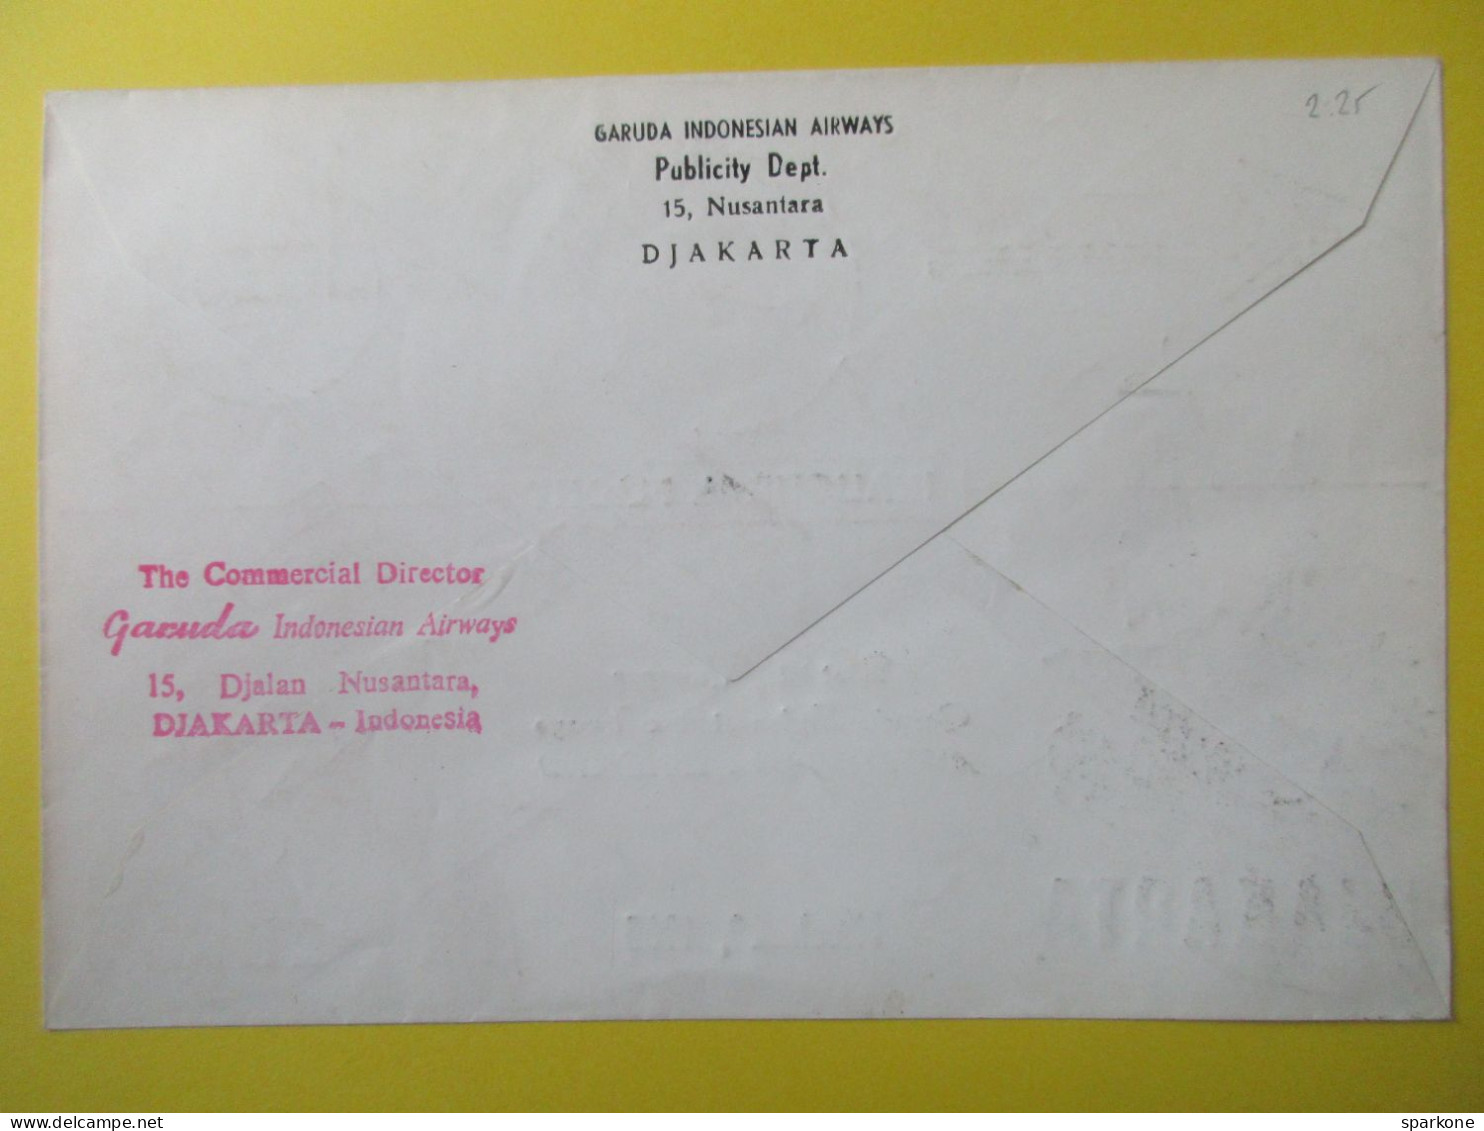 Marcophilie - Enveloppe - Vol Inaugural Djakarta Amsterdam 29 March 1965 - Garuda Indonésian Airways - Indonésie